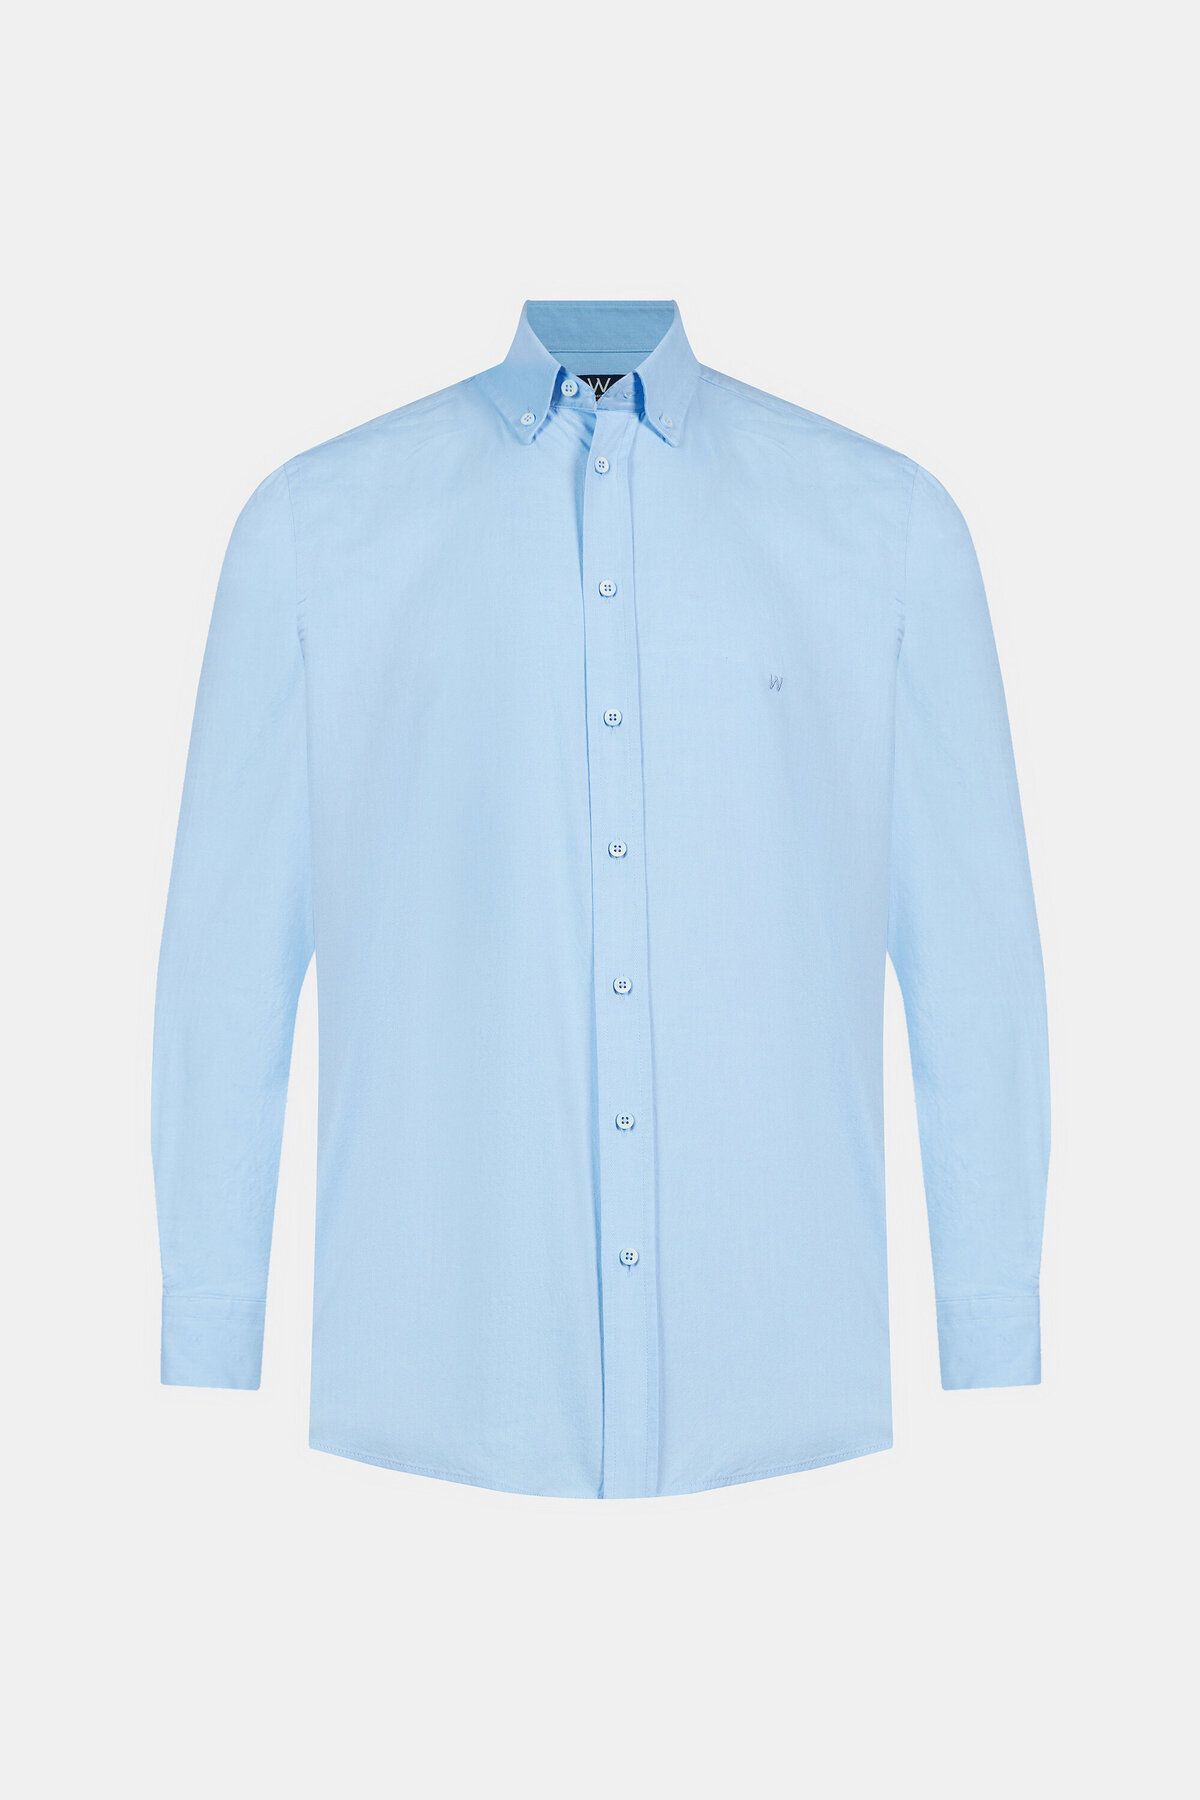 W Collection Mavi Oxford Gömlek